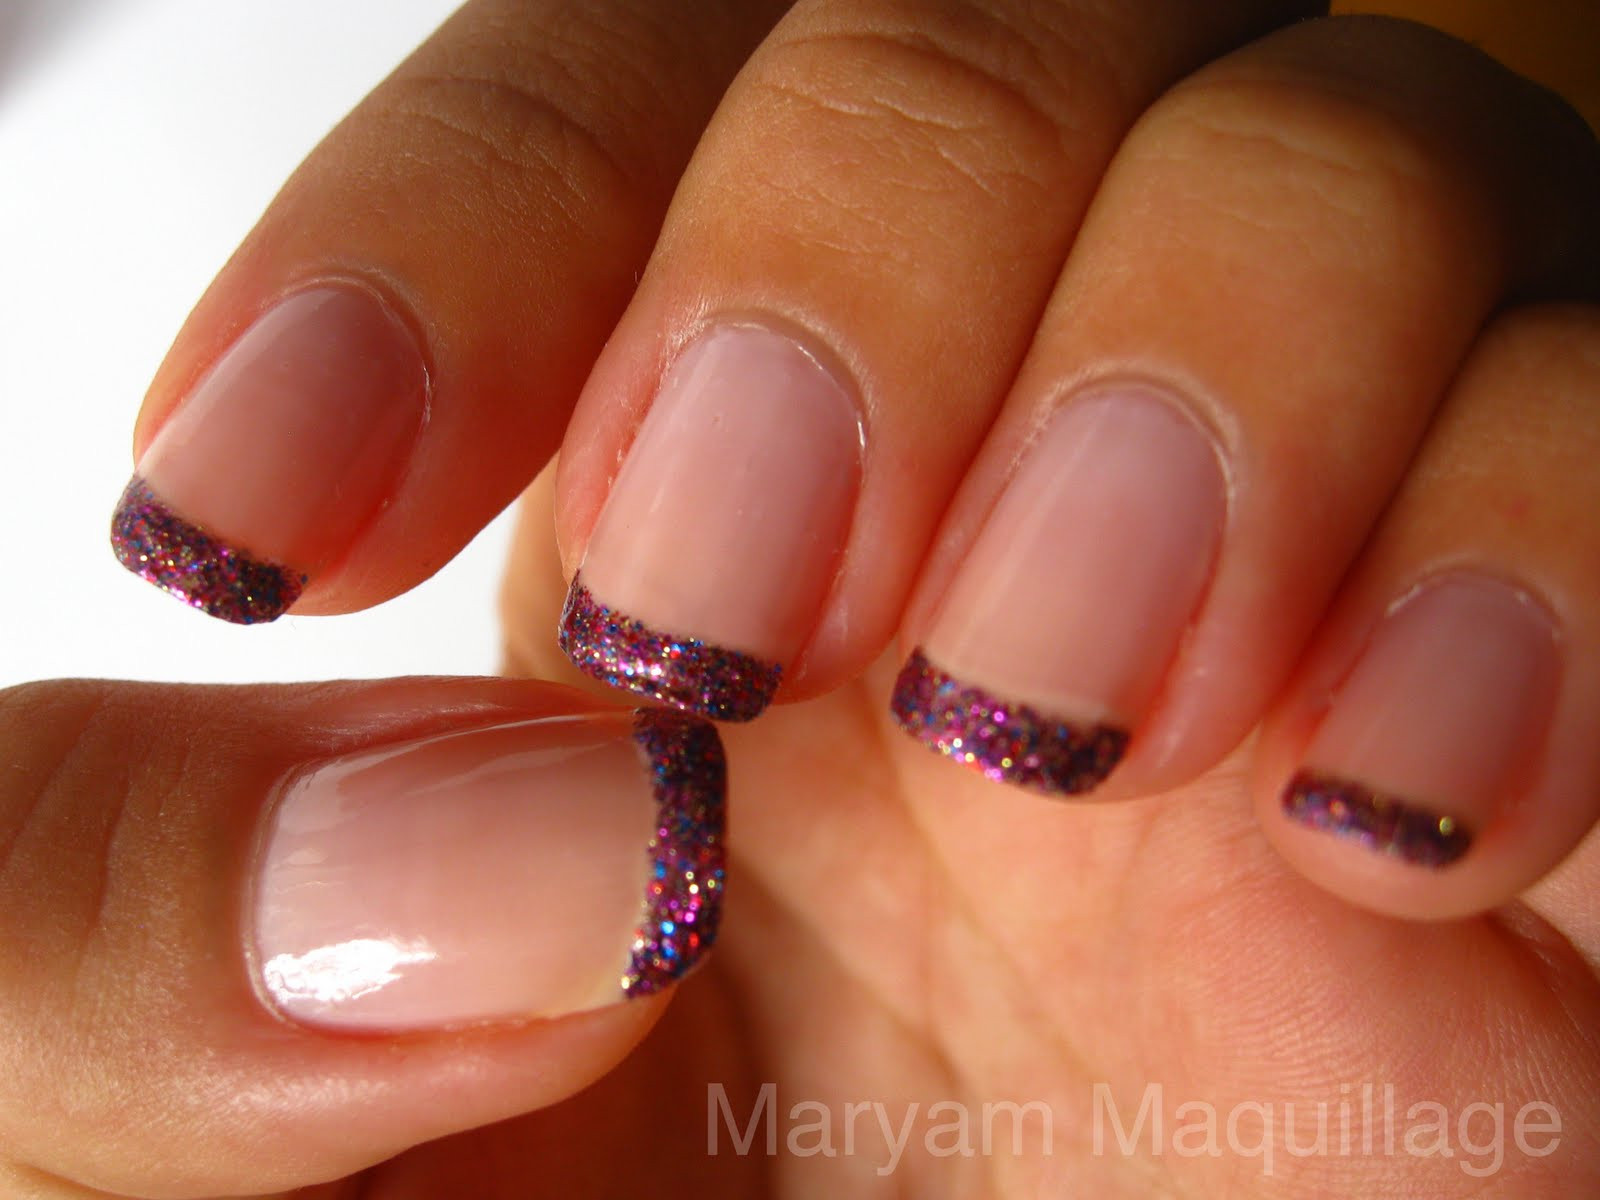 Pink Nails With Glitter Tips
 Maryam Maquillage Rockstar Pink Nail Tips